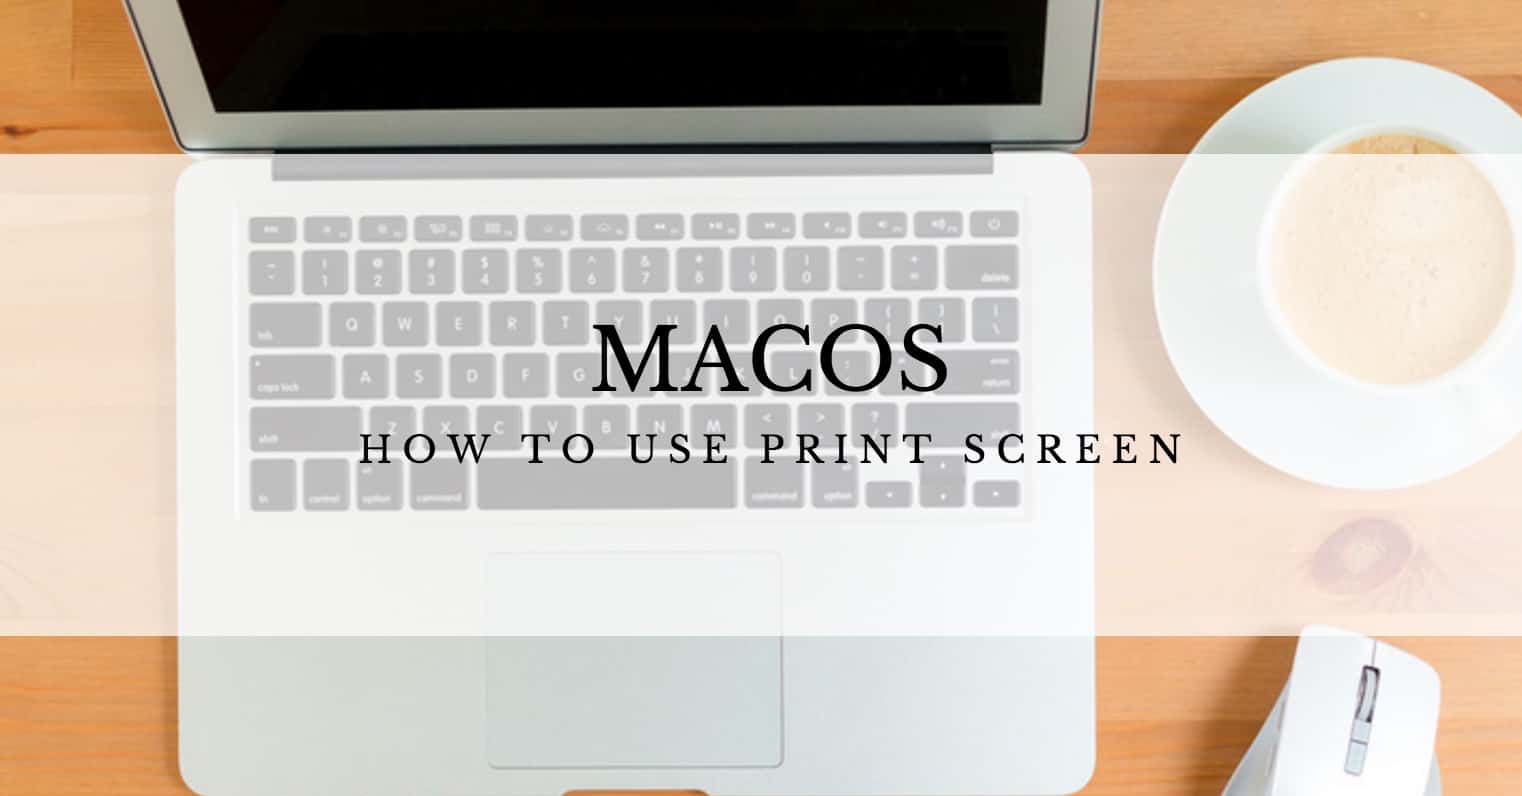 Use Print Screen on a Mac